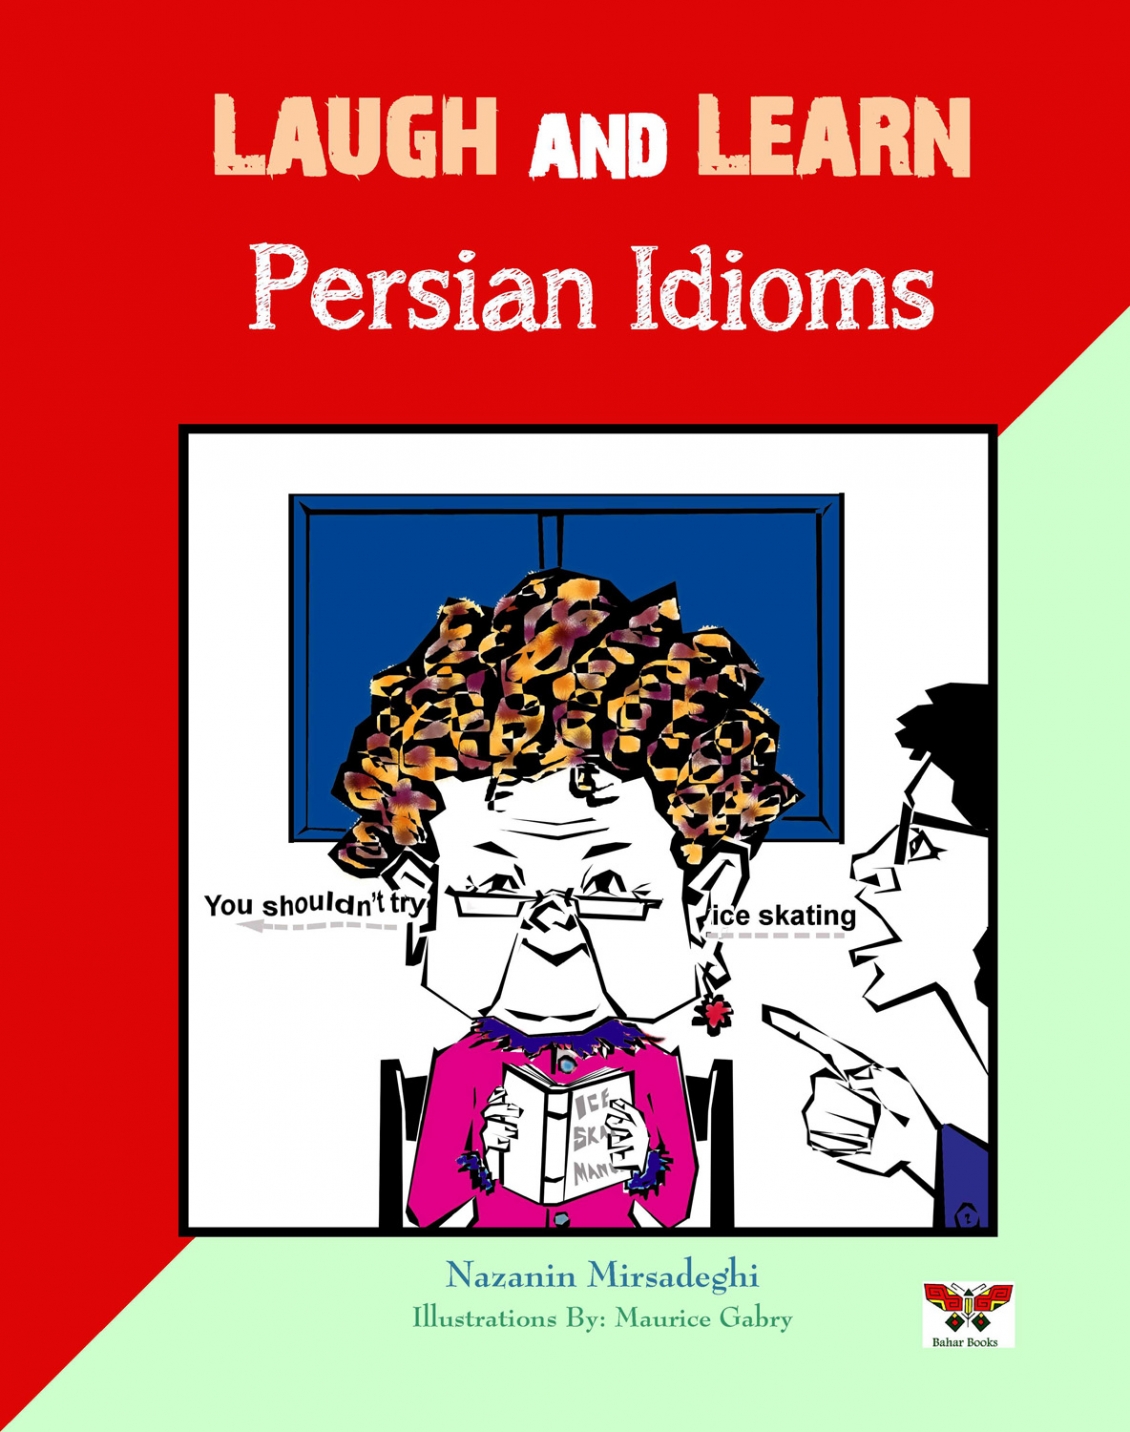 Farsi-English Bi-lingual Edition 100 Persian Verbs Fully Conjugated in the Most Common Tenses